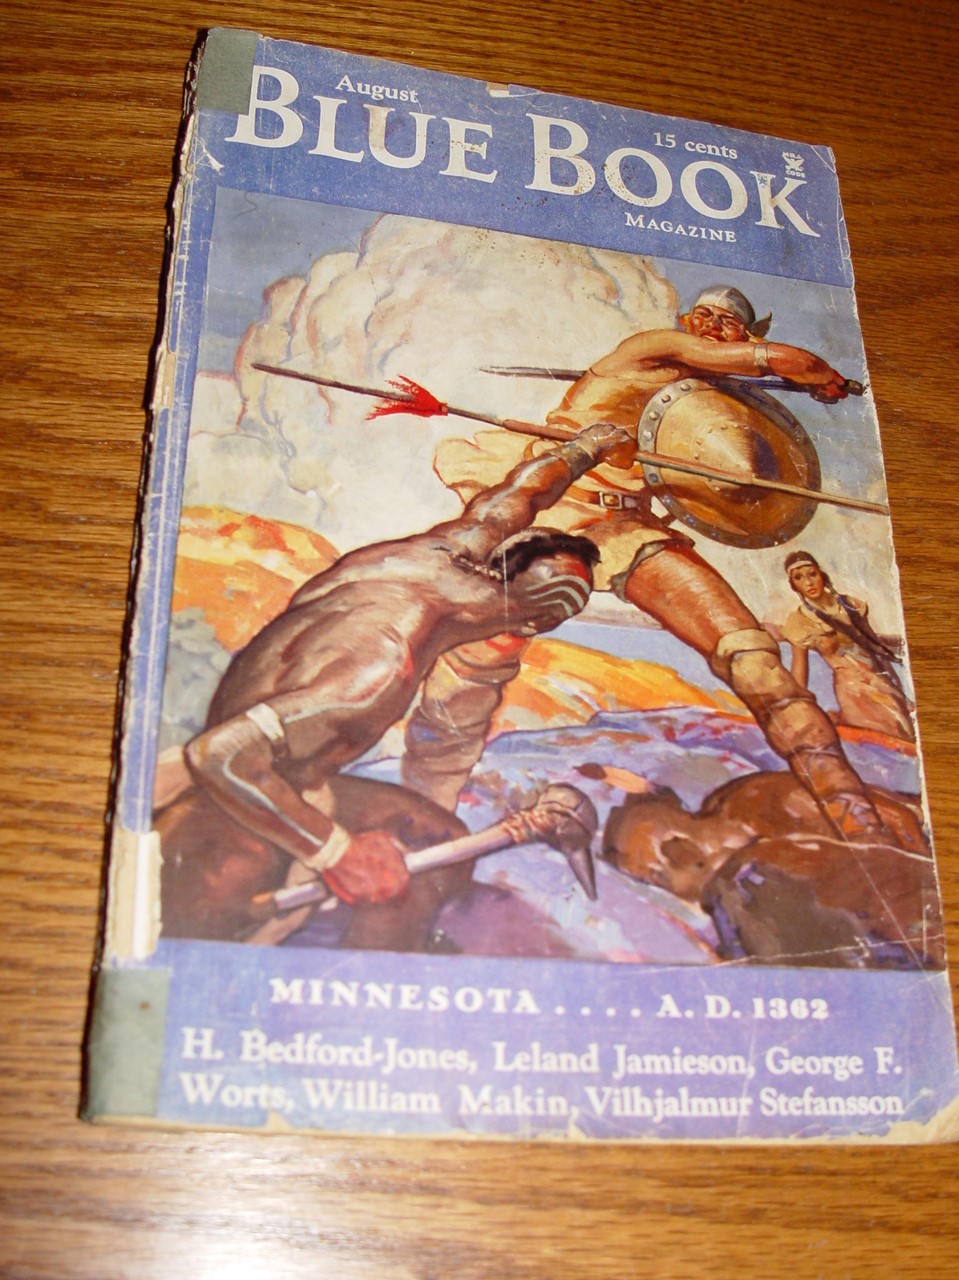 BLUE BOOK Magazine: August 1935 "Hawk
                        of the Wilderness" No. 4